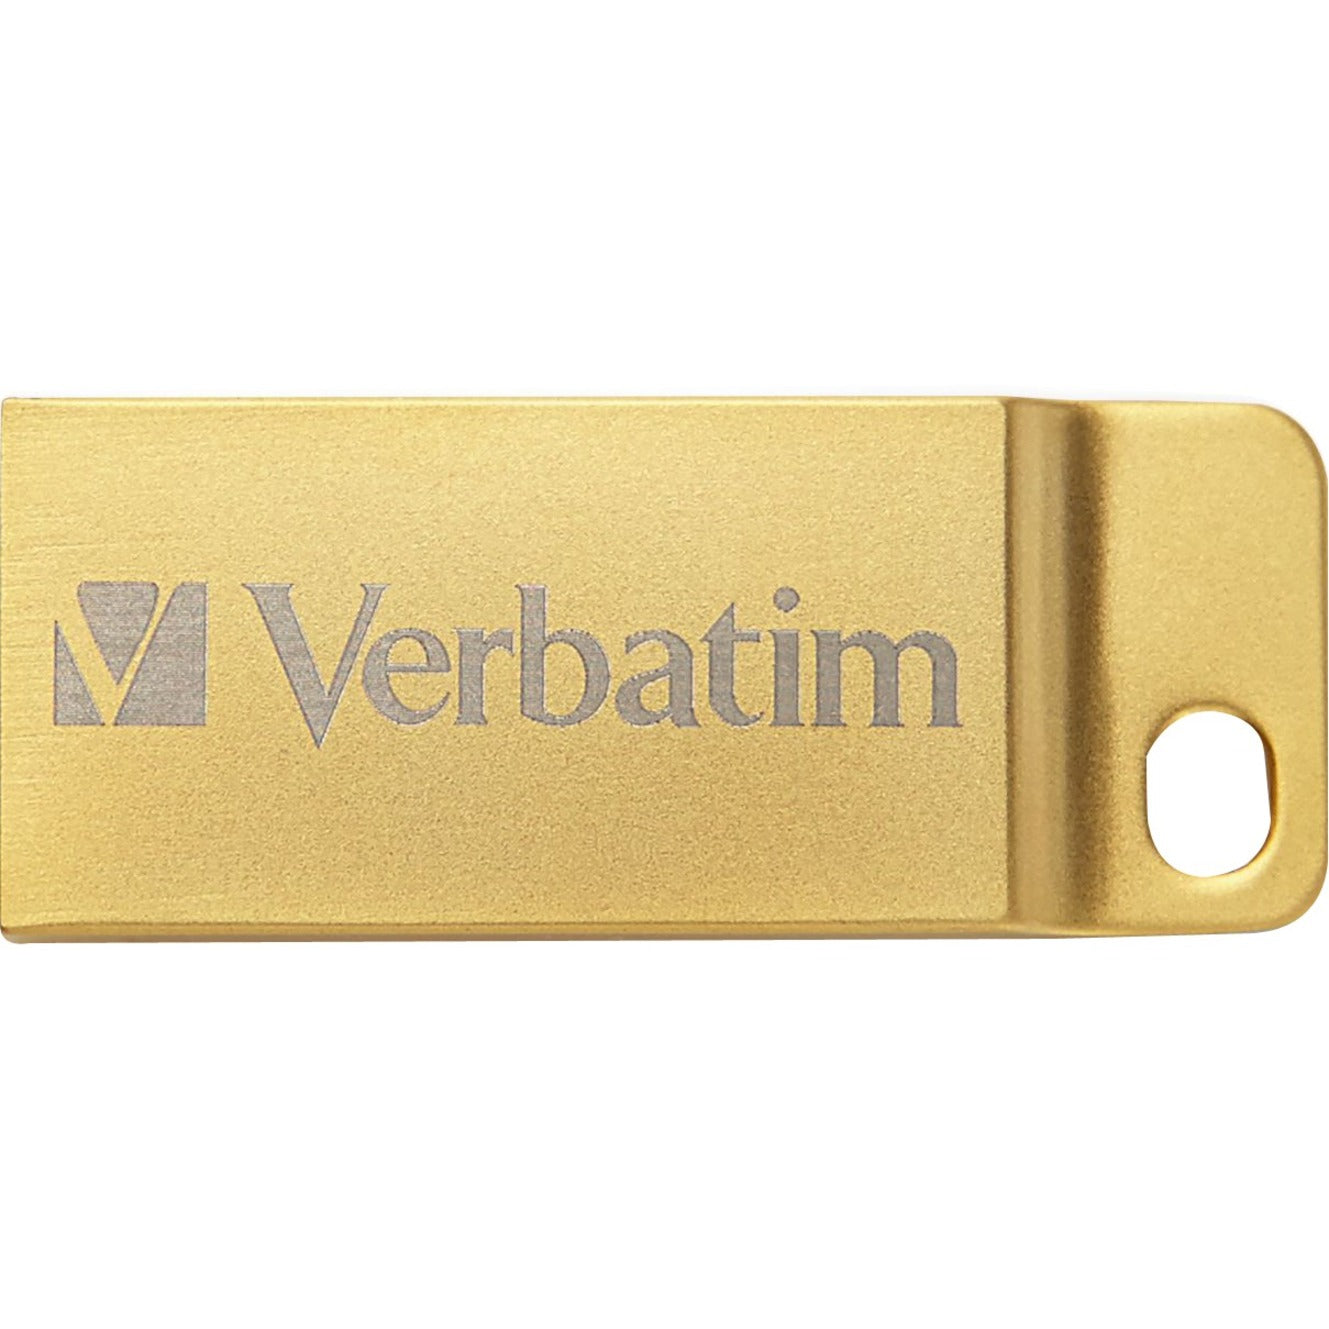 Verbatim 99104 Metal Executive USB 3.0 Flash Drive - Gold, 16GB Storage Capacity